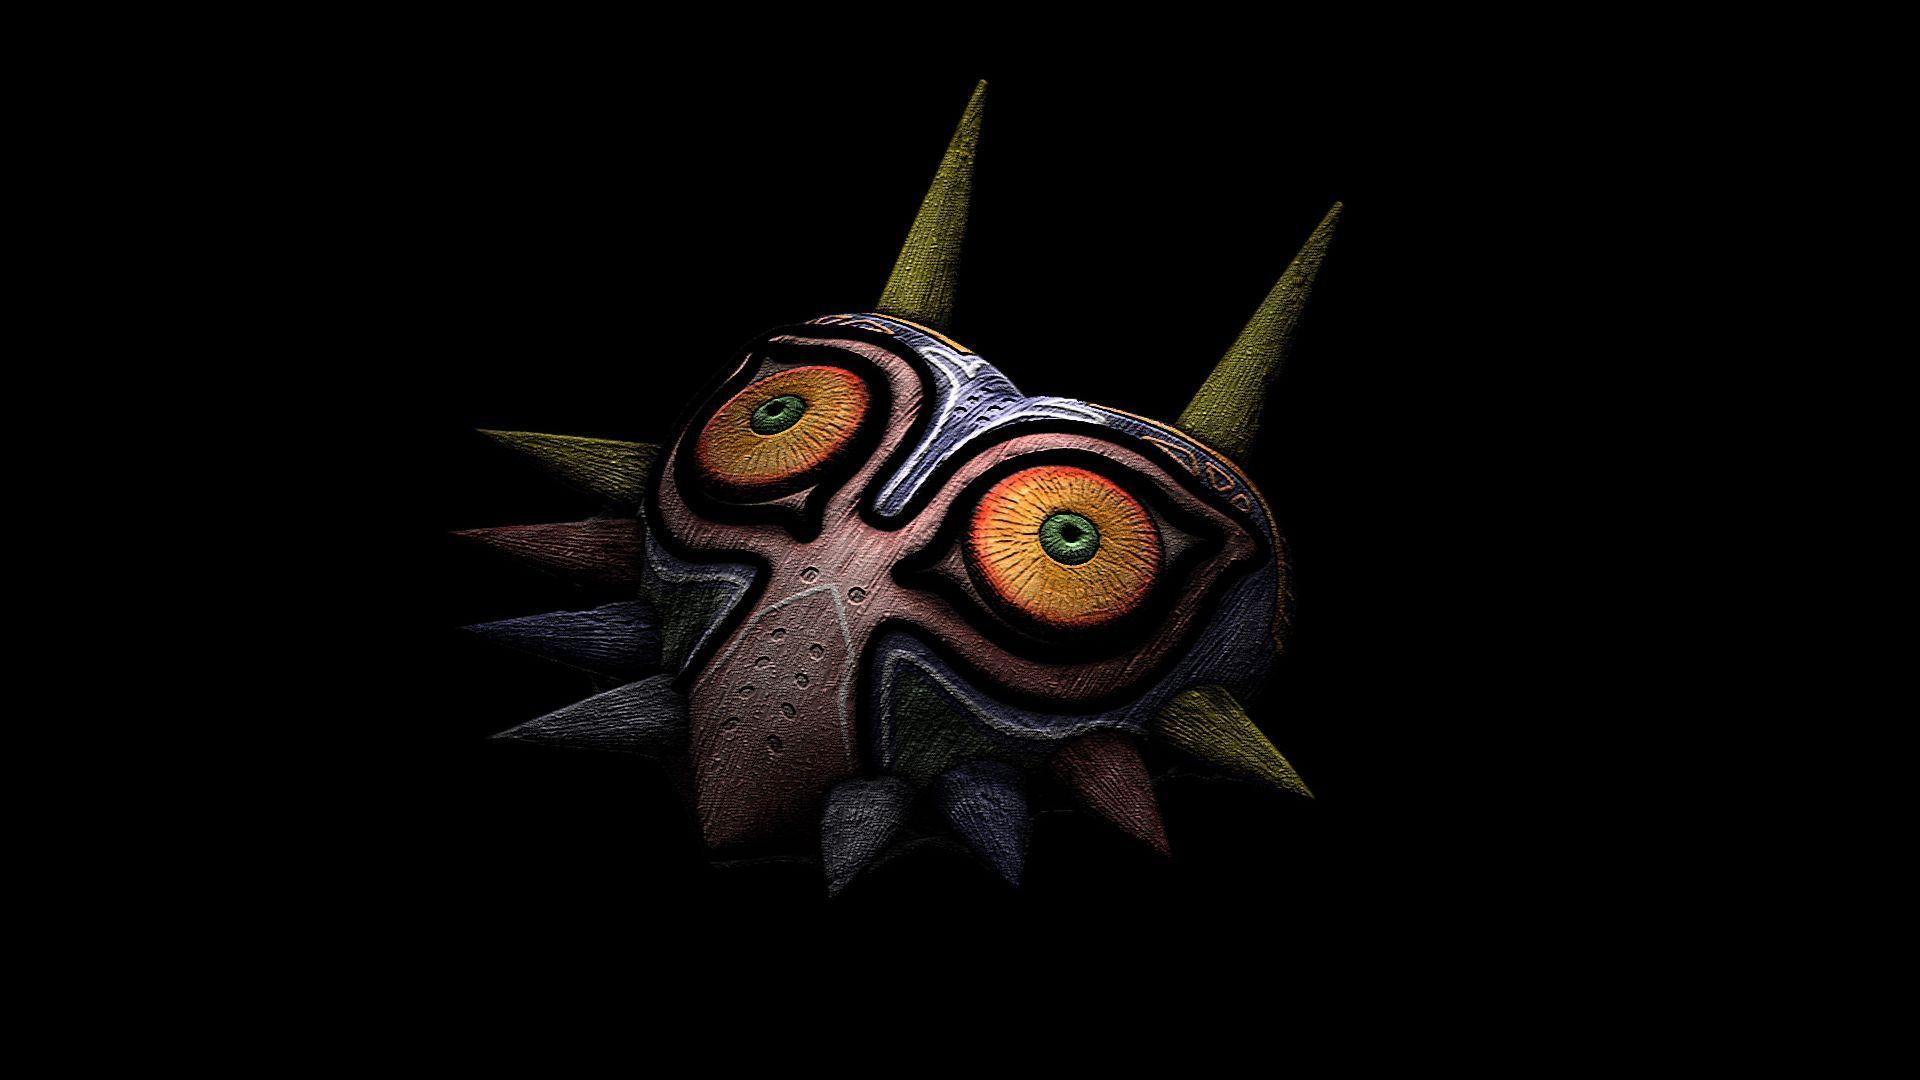 25 The Legend Of Zelda: Majora's Mask HD Wallpapers | Backgrounds ...